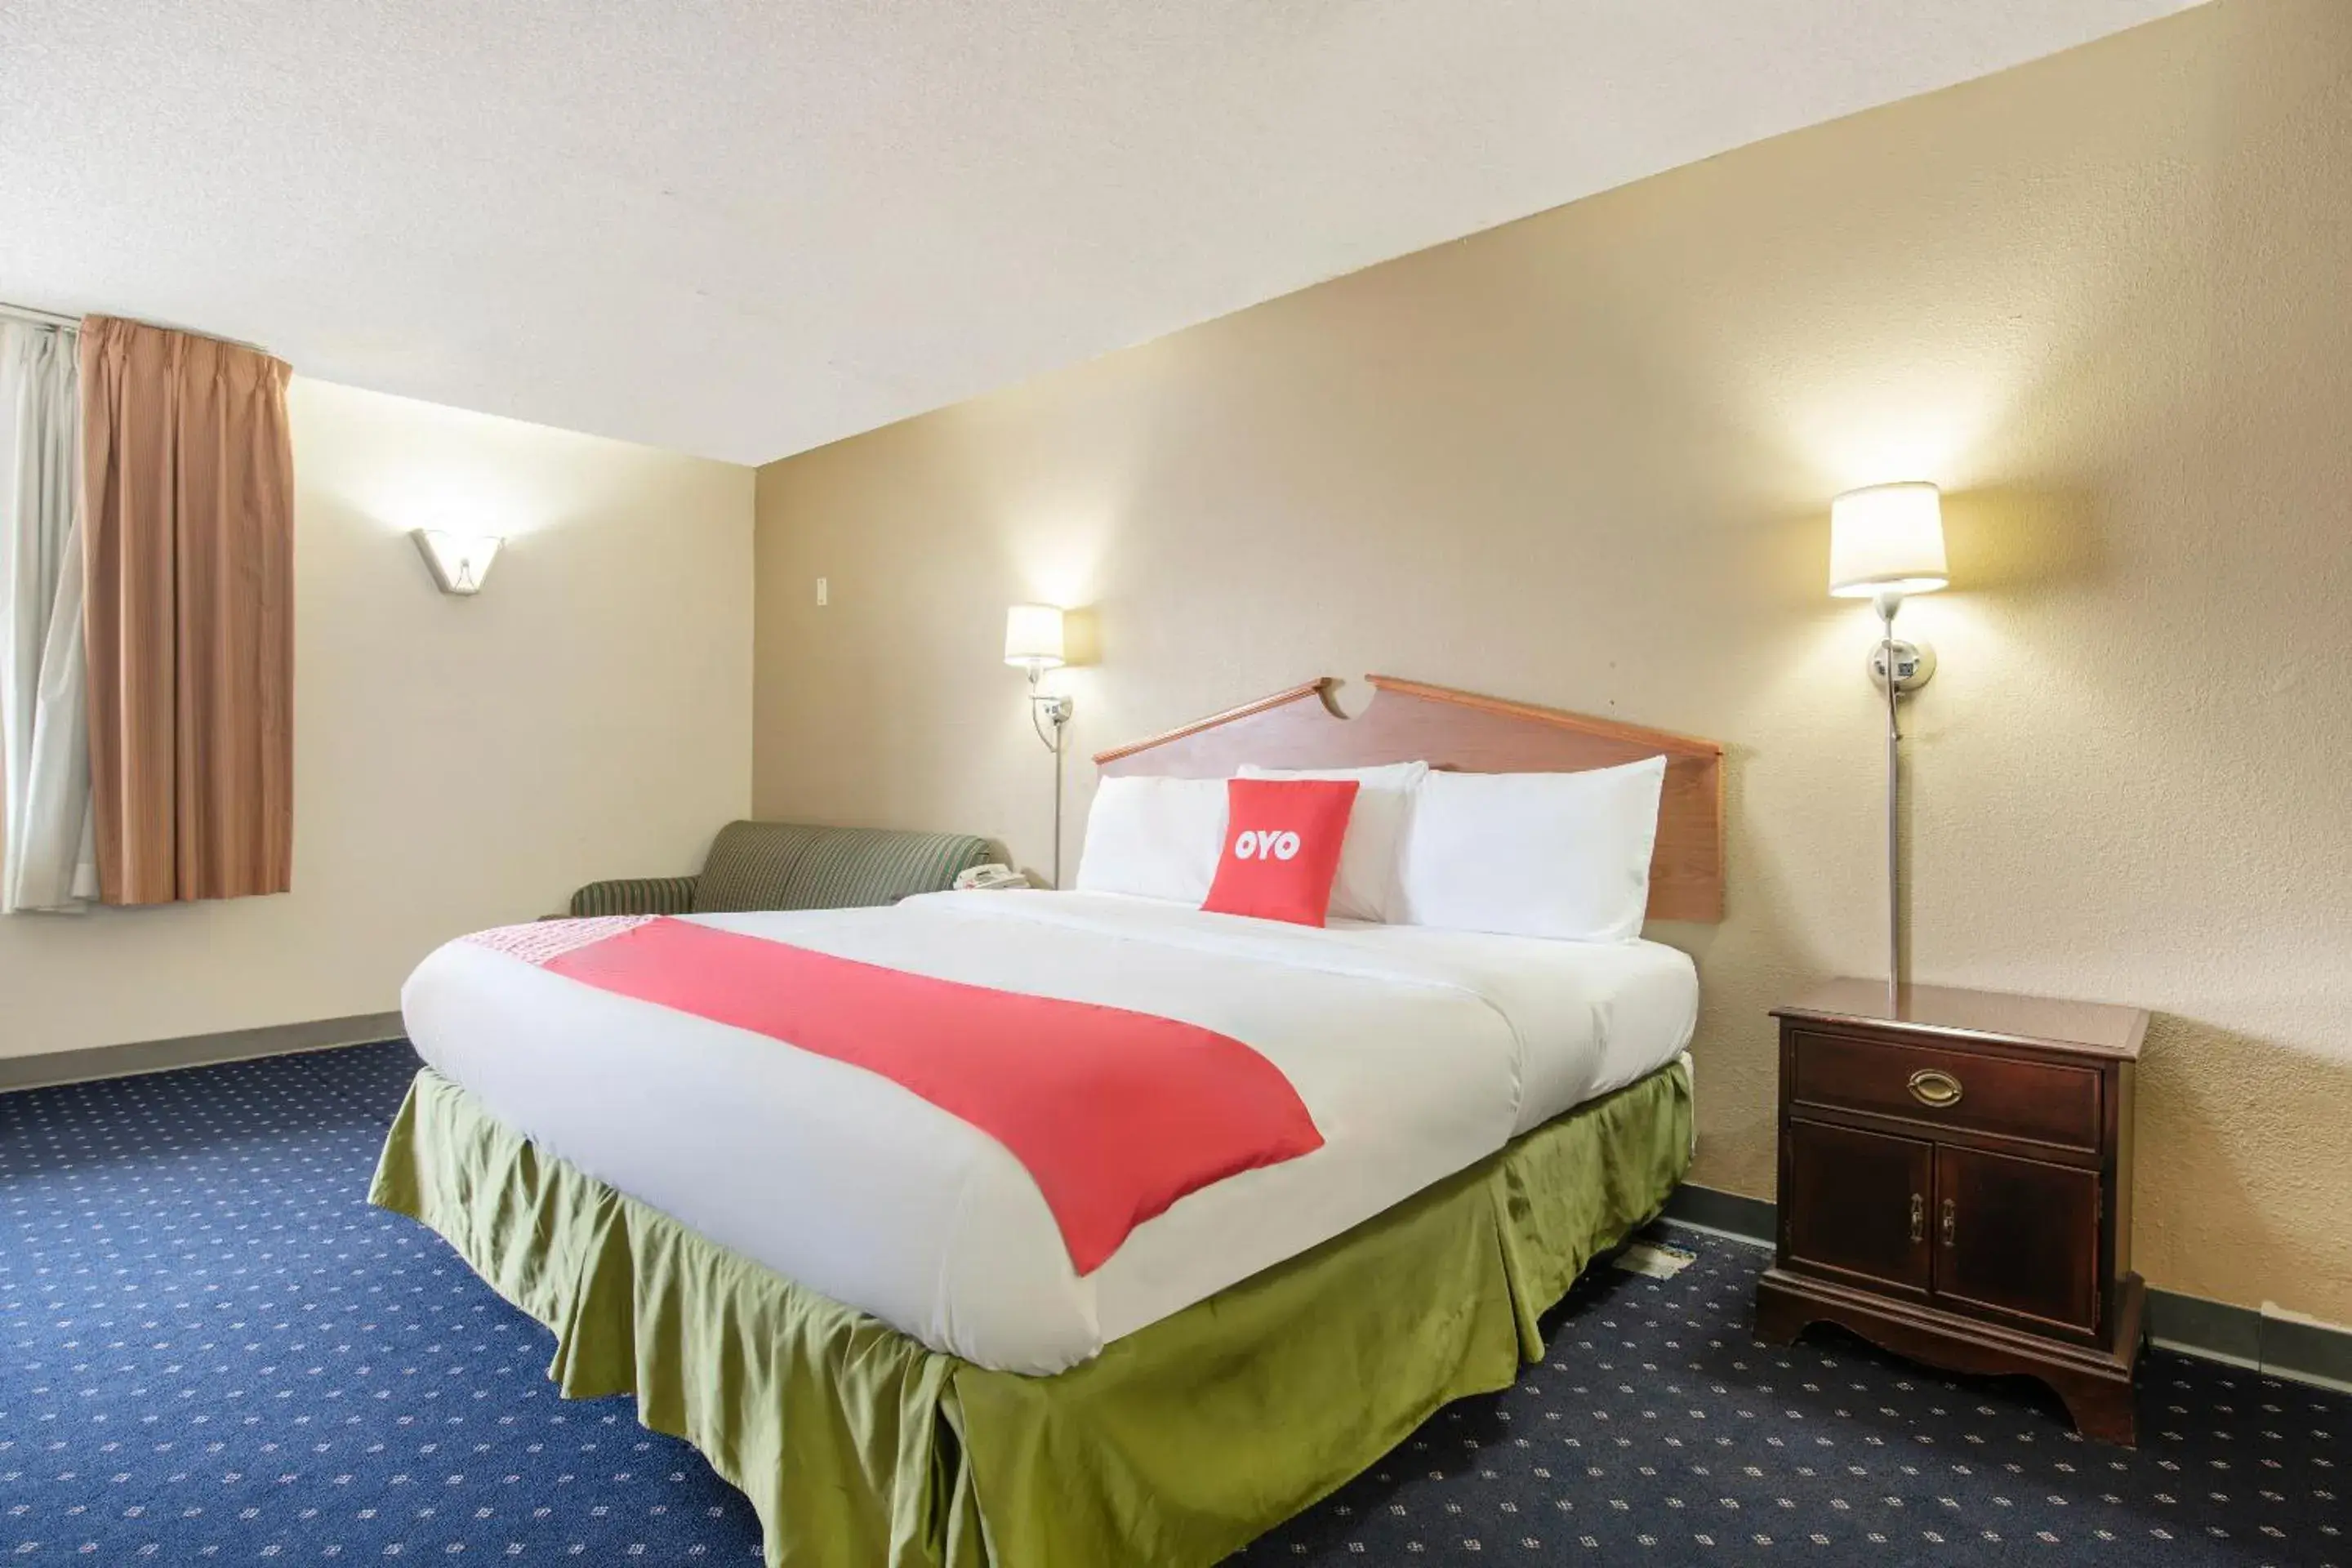 Bedroom, Bed in OYO Hotel Tulsa International Airport